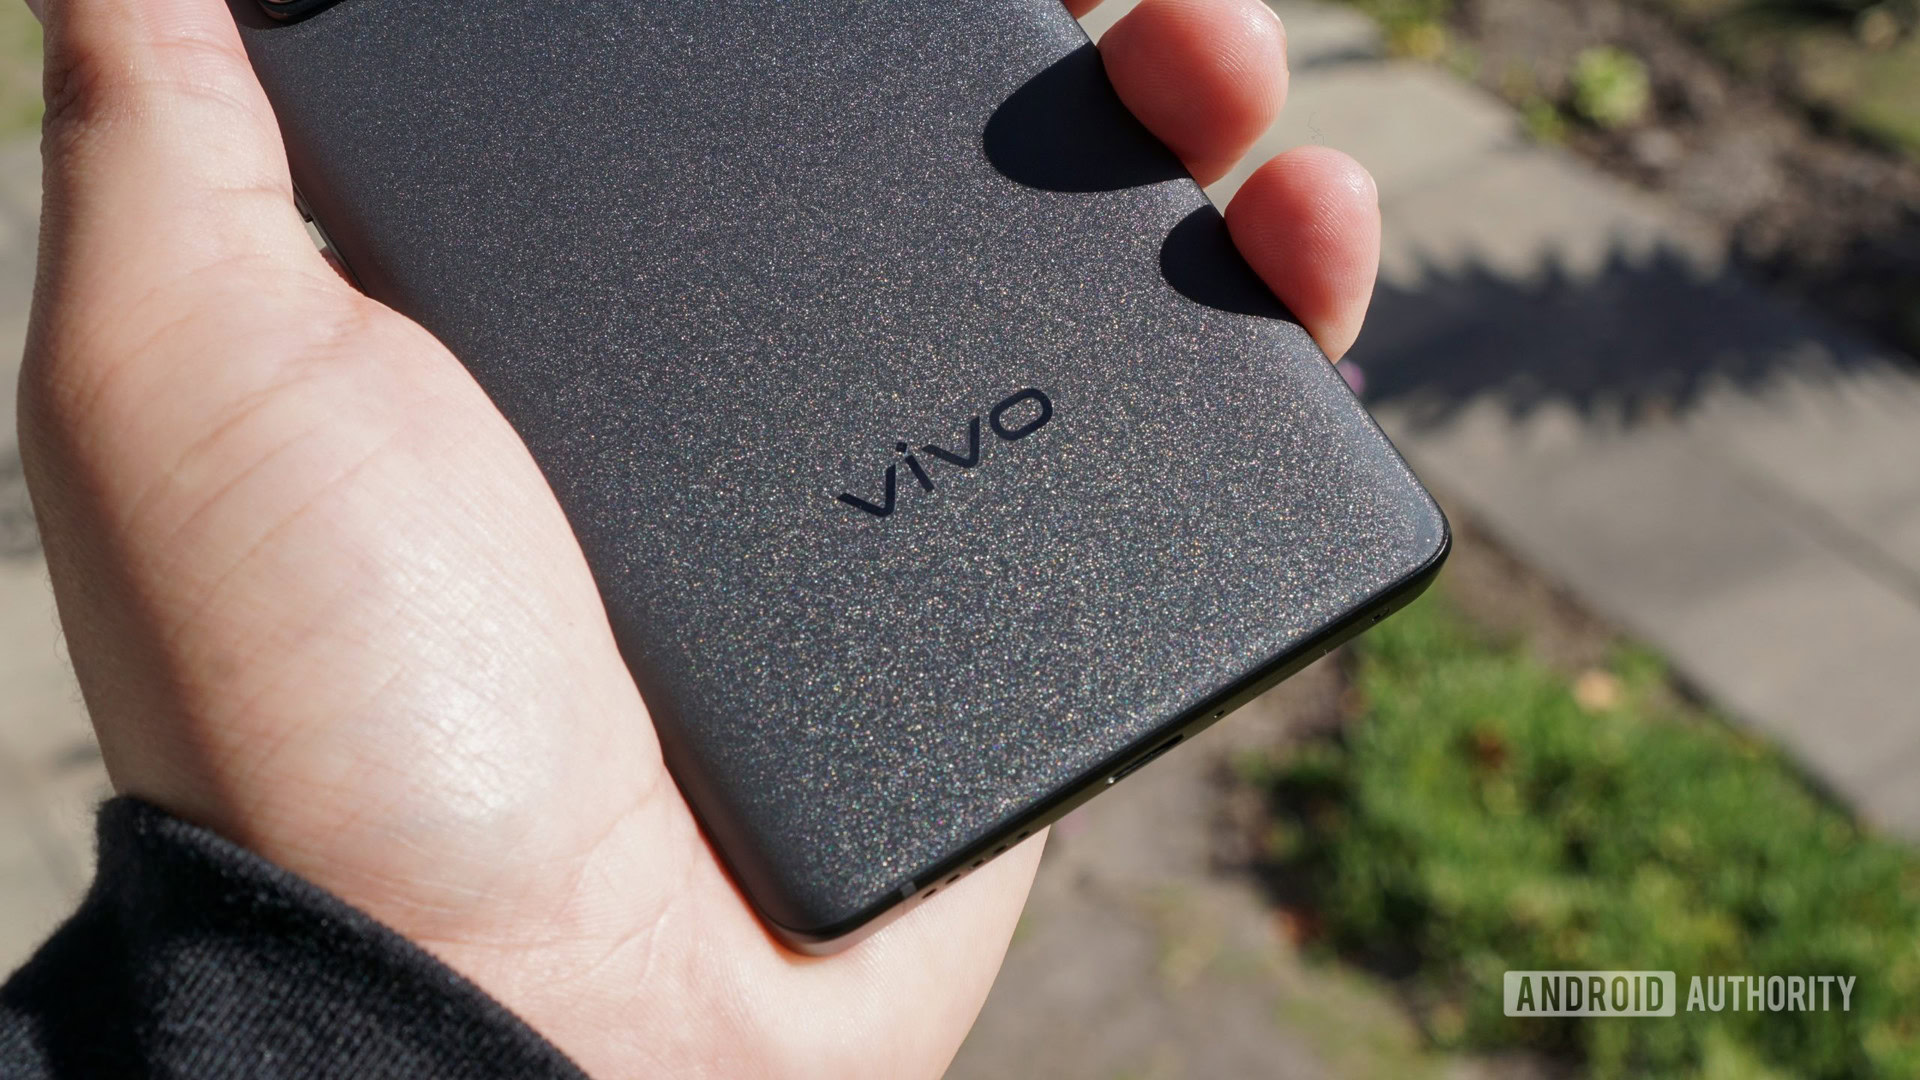 Vivo X80 Pro 5G Review - Pros and cons, Verdict